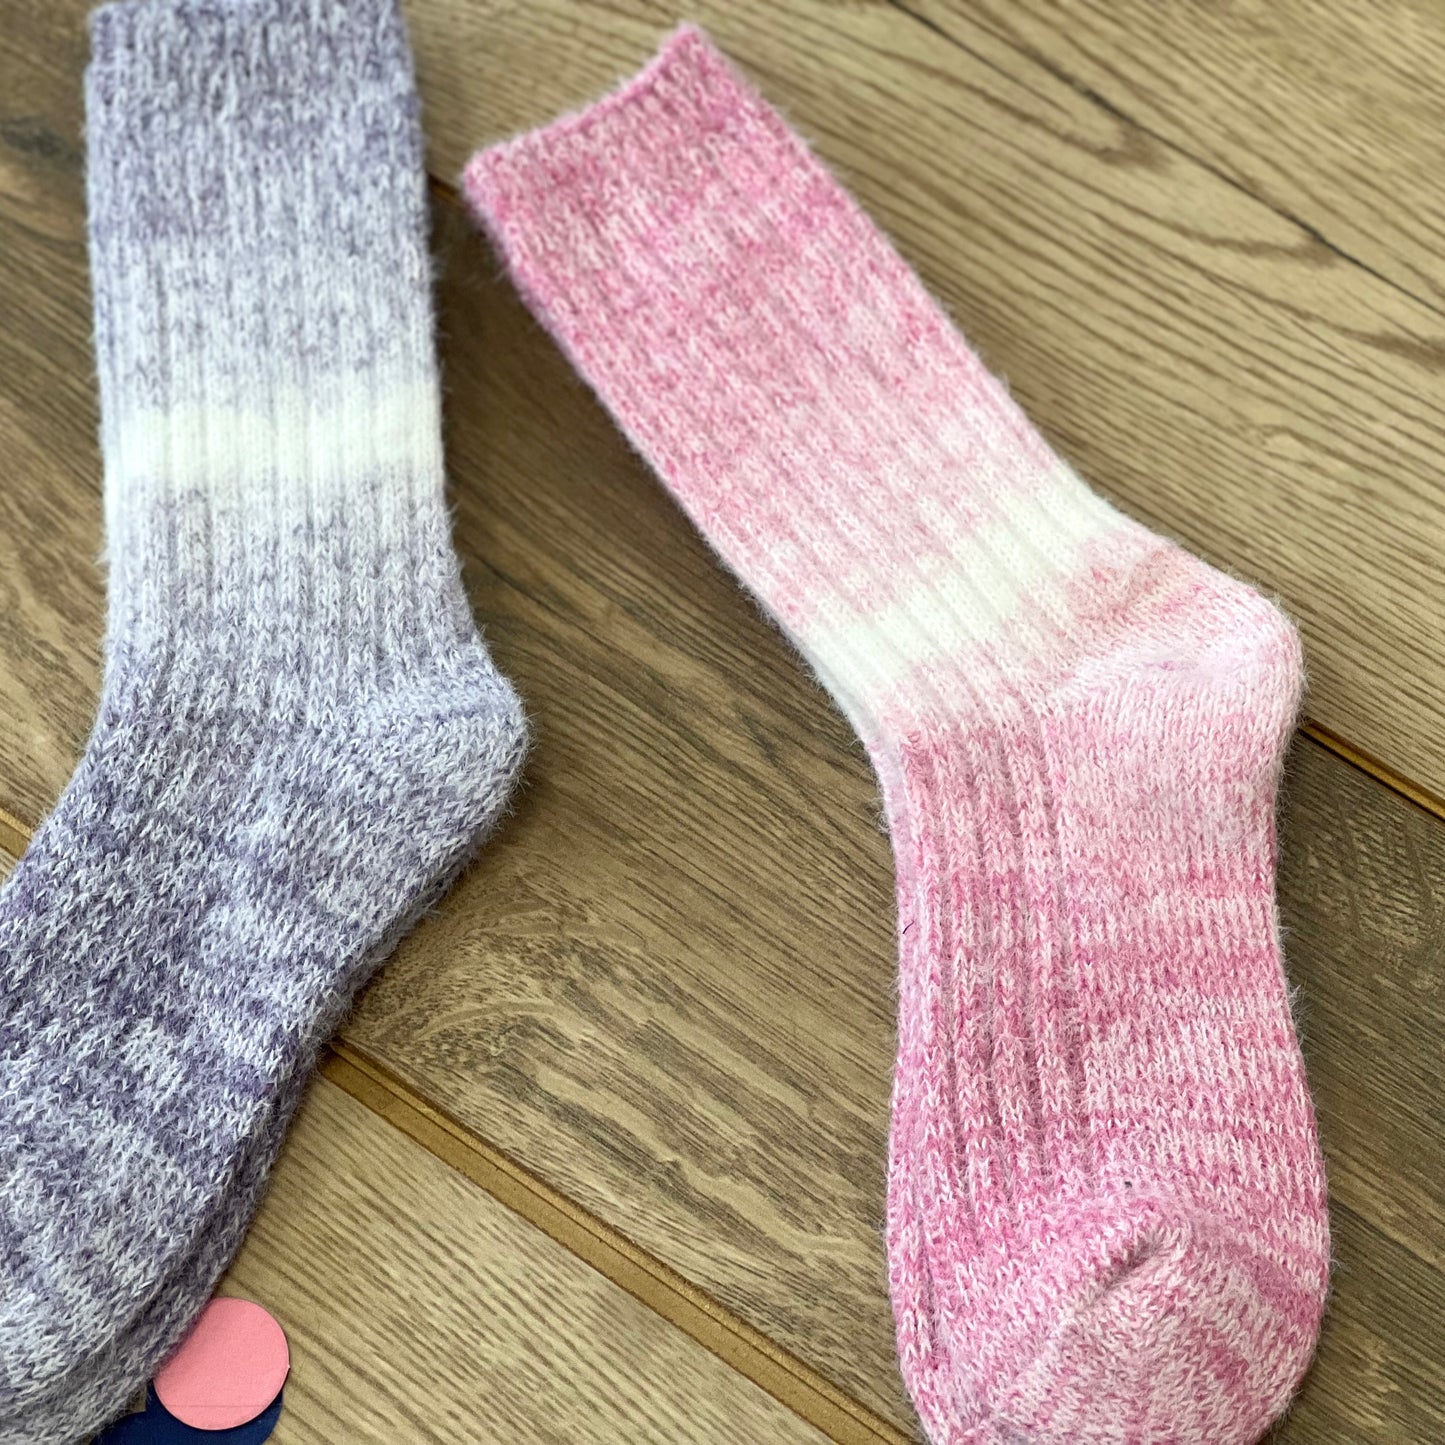 Get Well Soon Pink Snuggle Socks